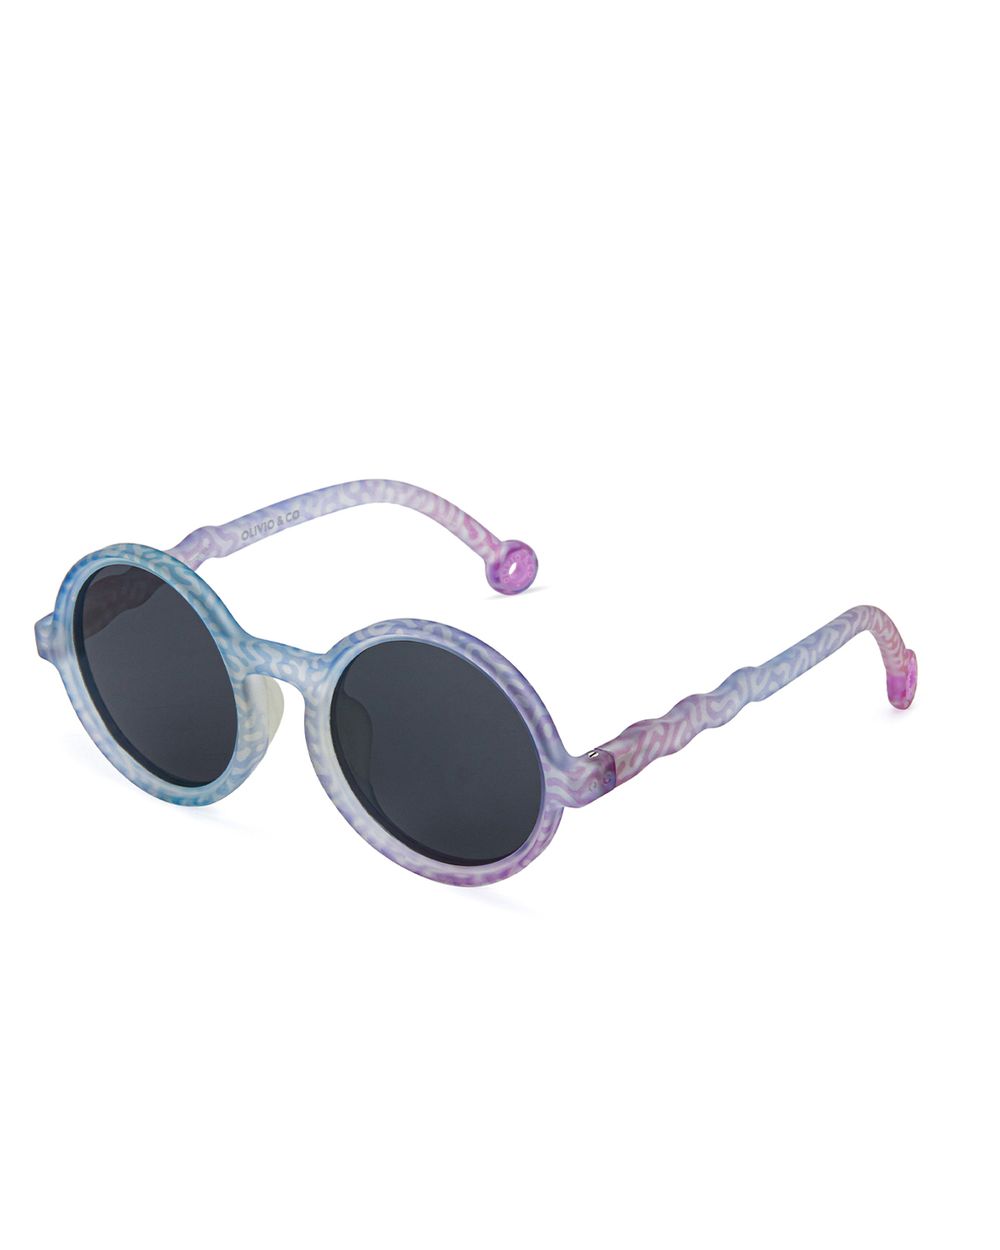 Kids Round Sunglasses Coral Fantasy